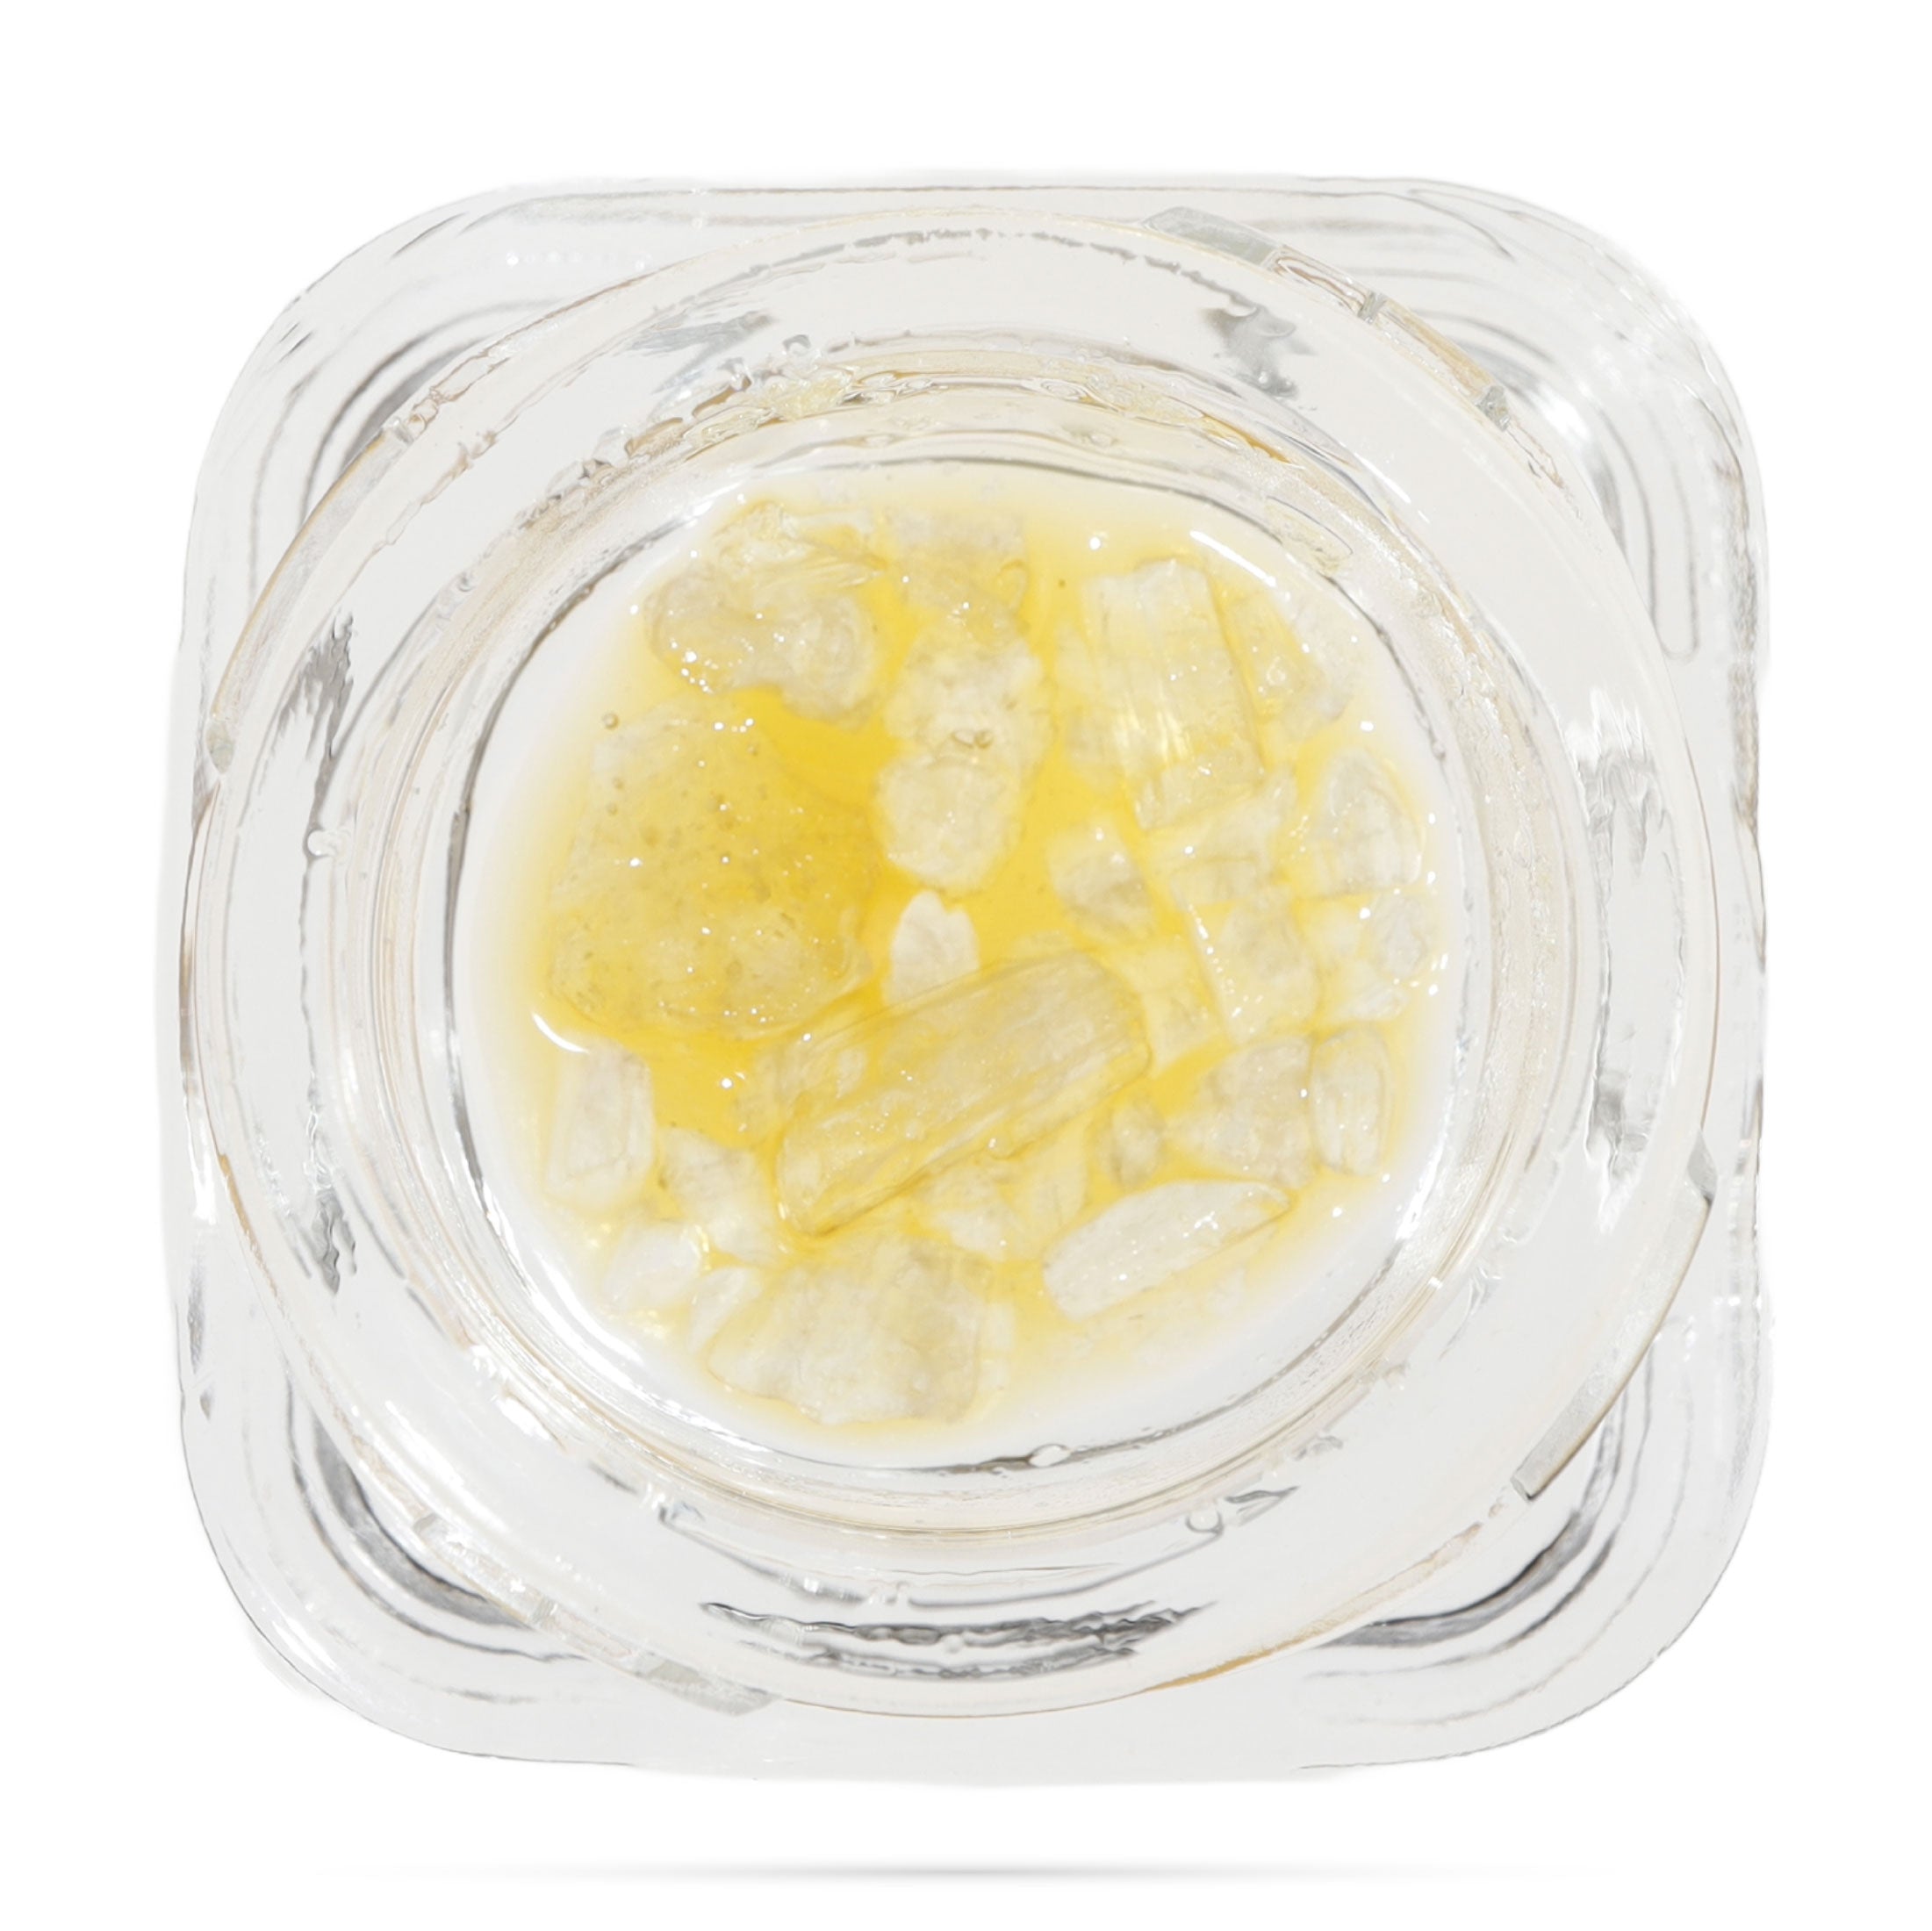 Image of a glass jar containing 1 gram of CBD Sauce and Diamonds.